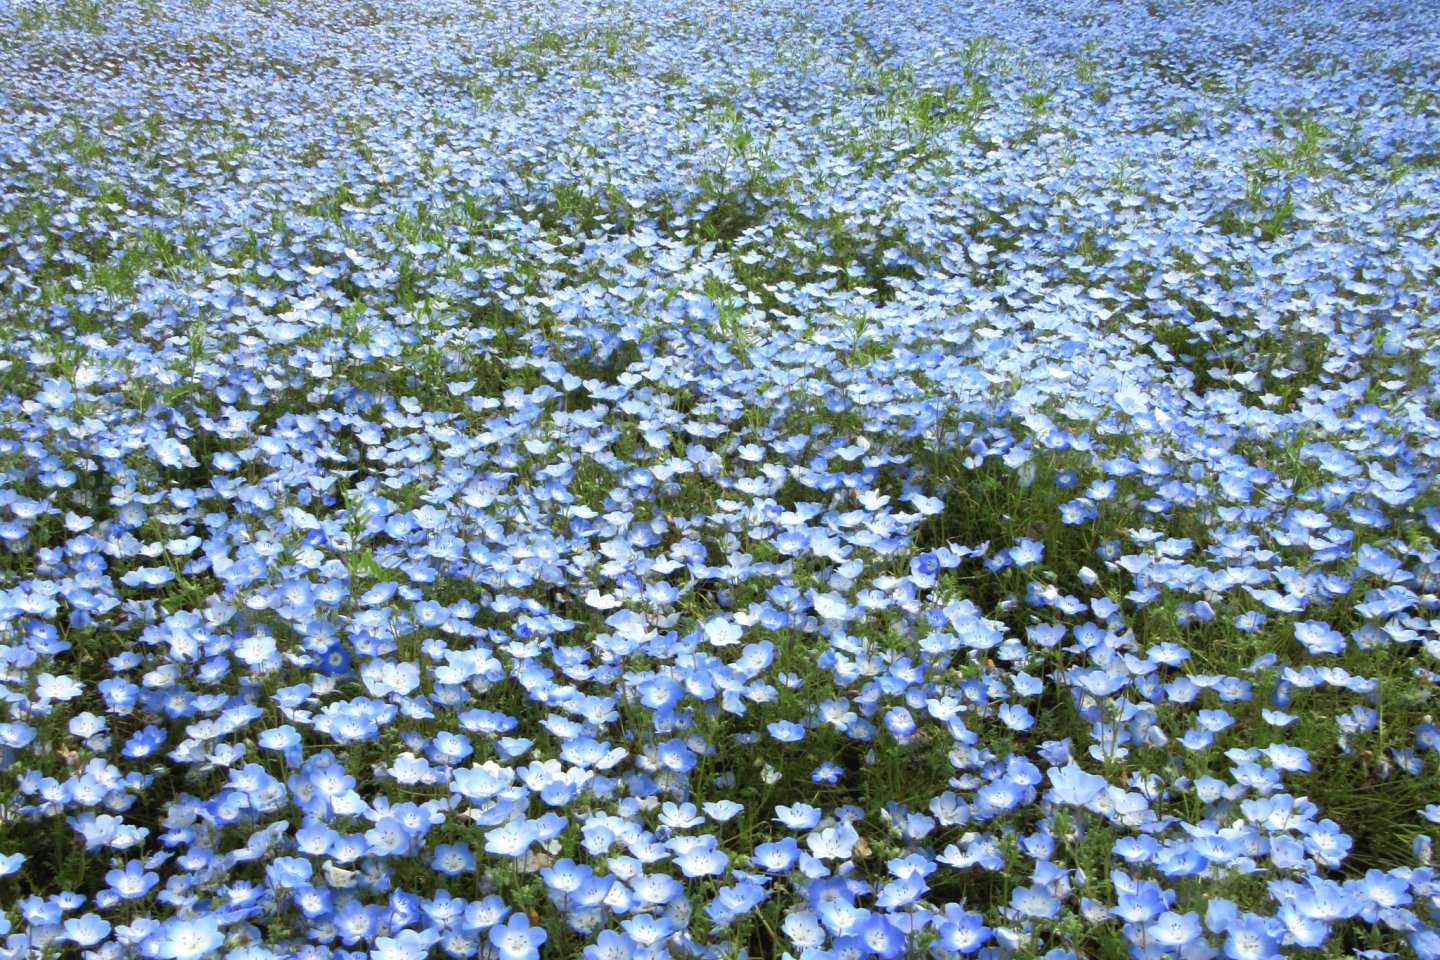 Endless blue fields of nemophila